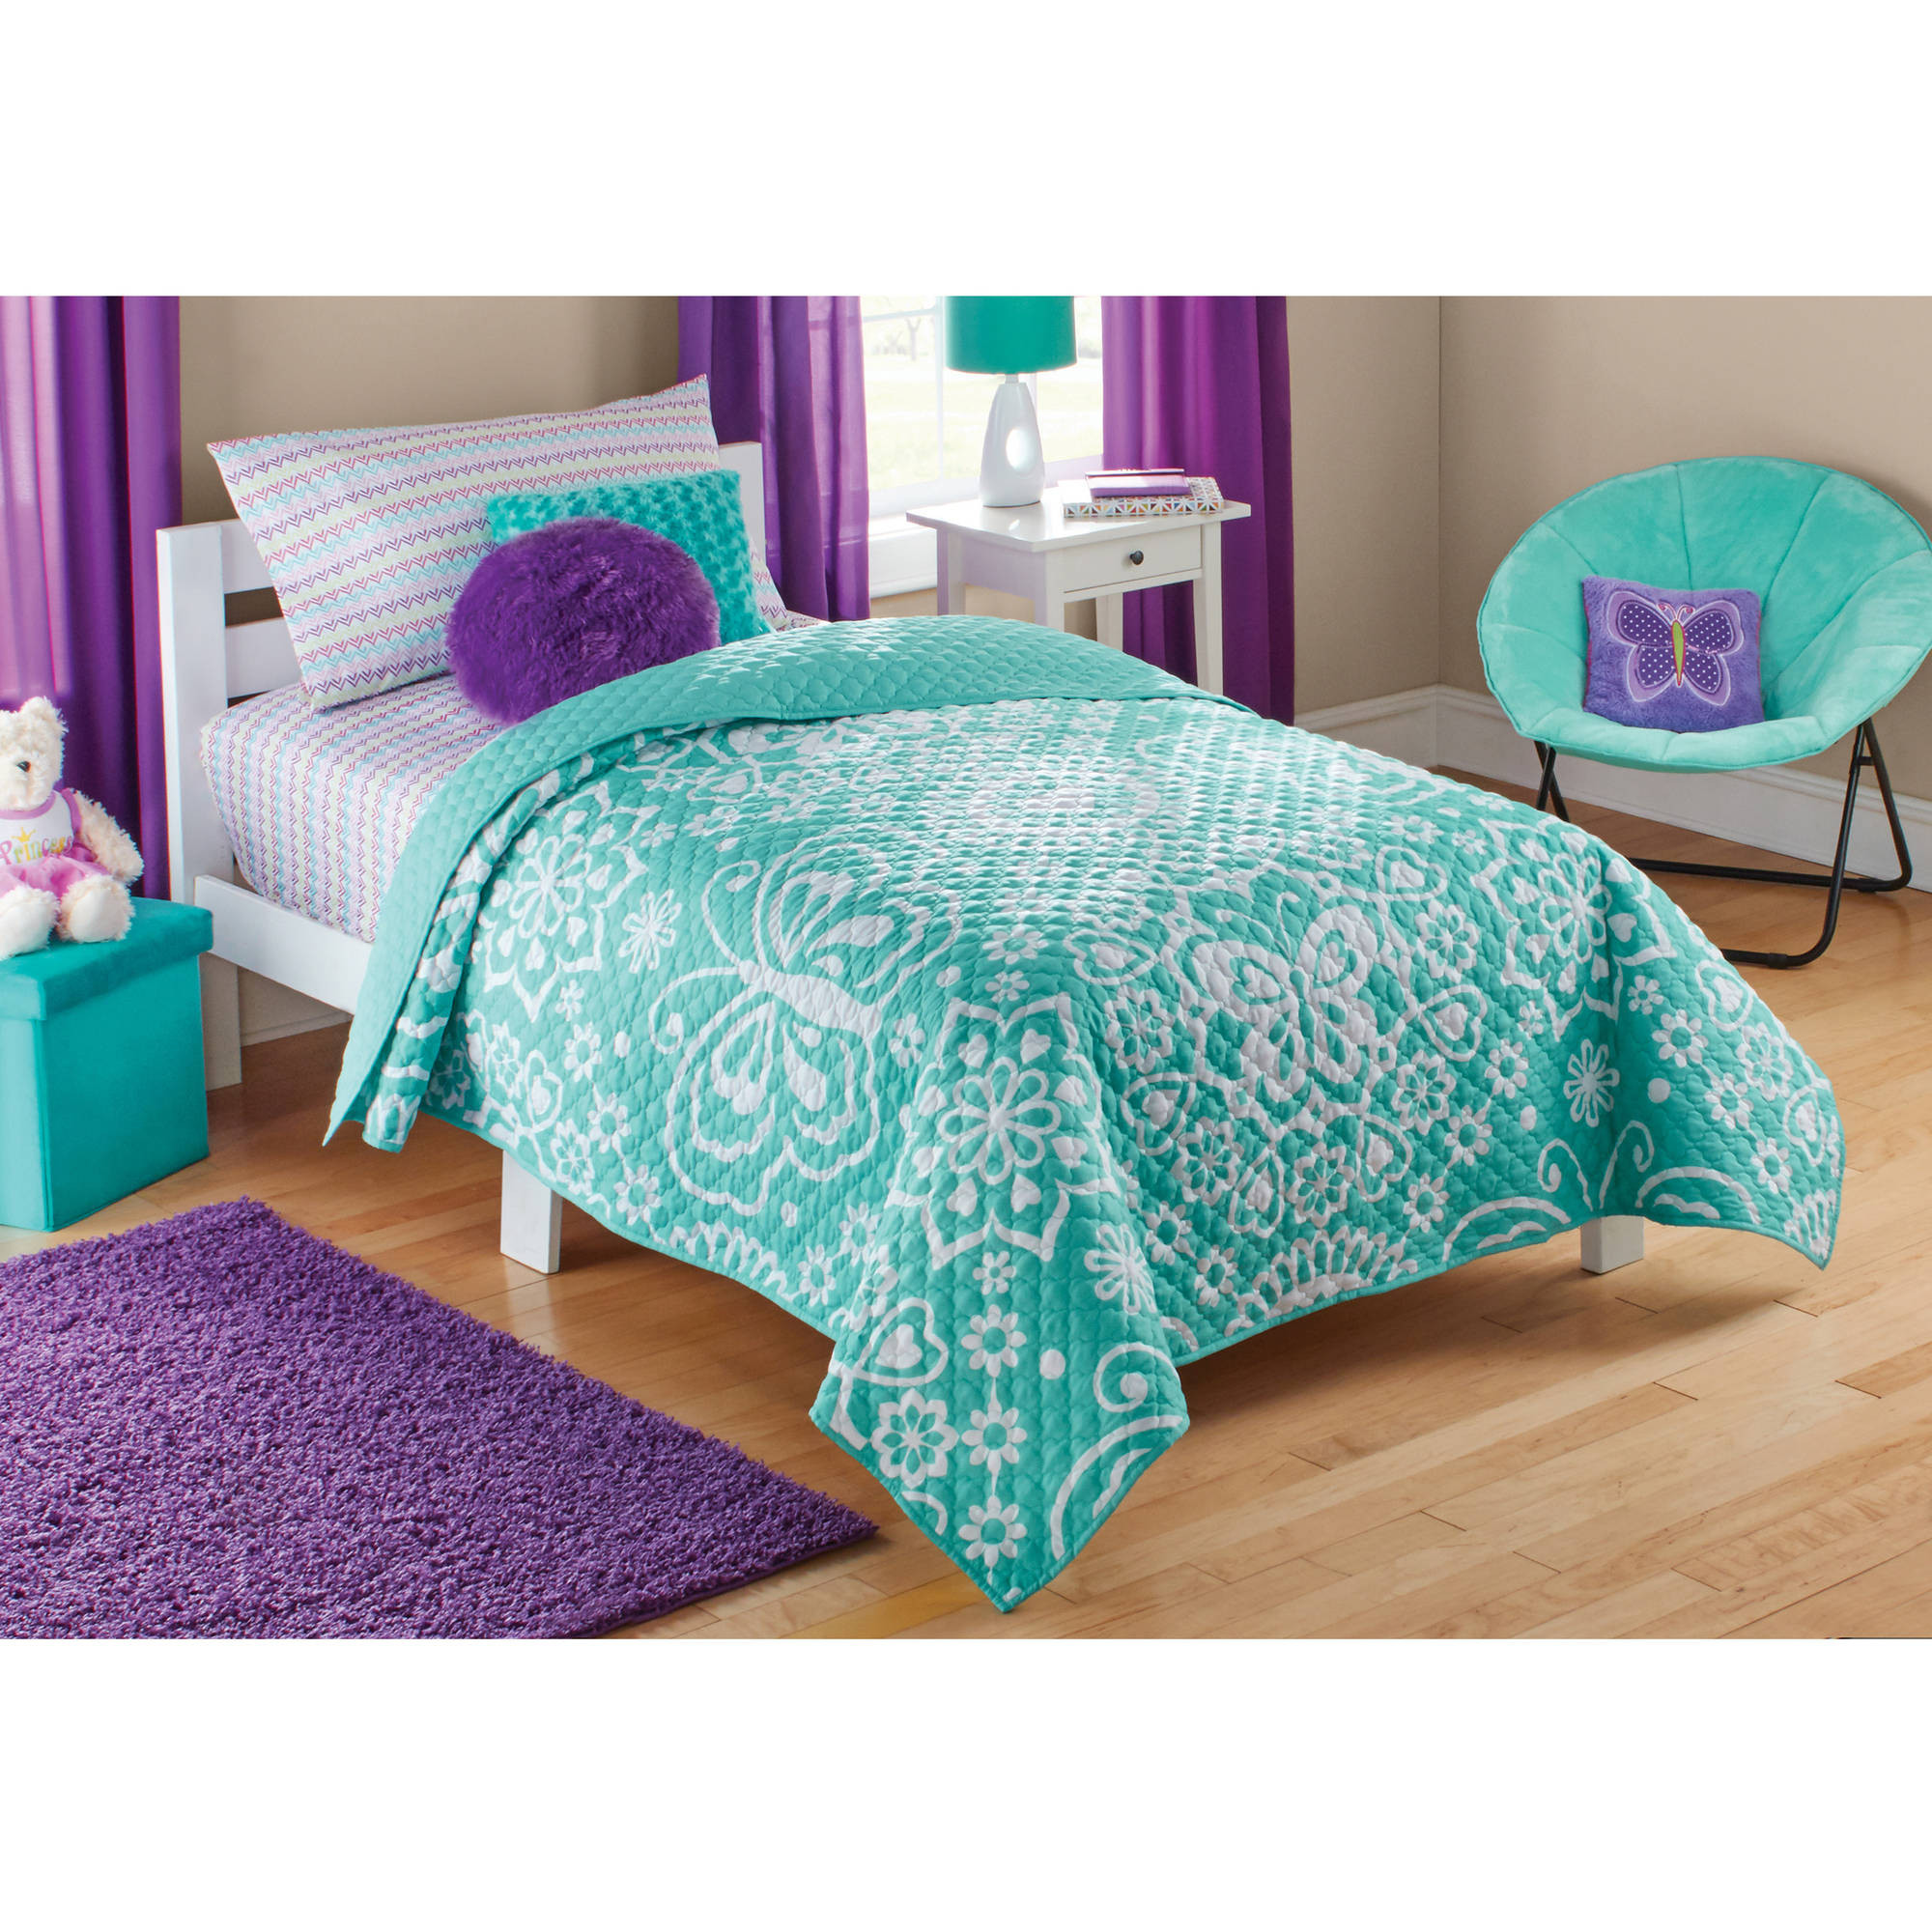 Walmart Kids Bedroom
 Mainstays Kids Purple Butterfly Coordinated Bed in a Bag